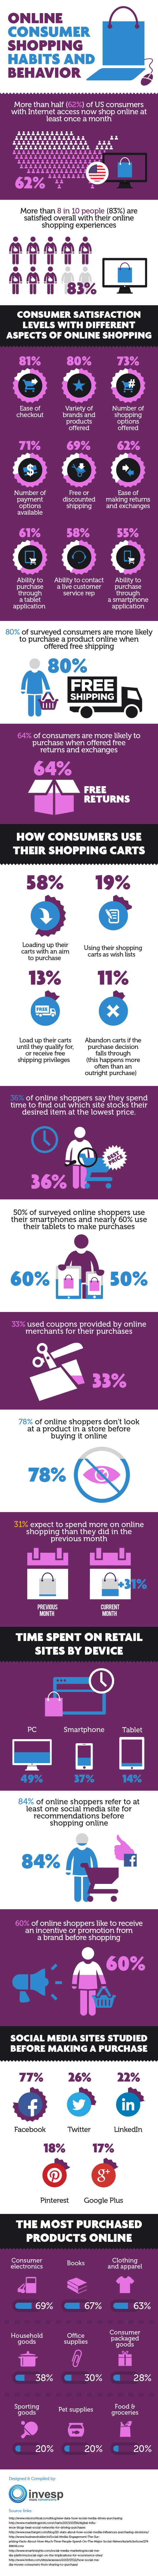 online-consumer-shopping-habbits